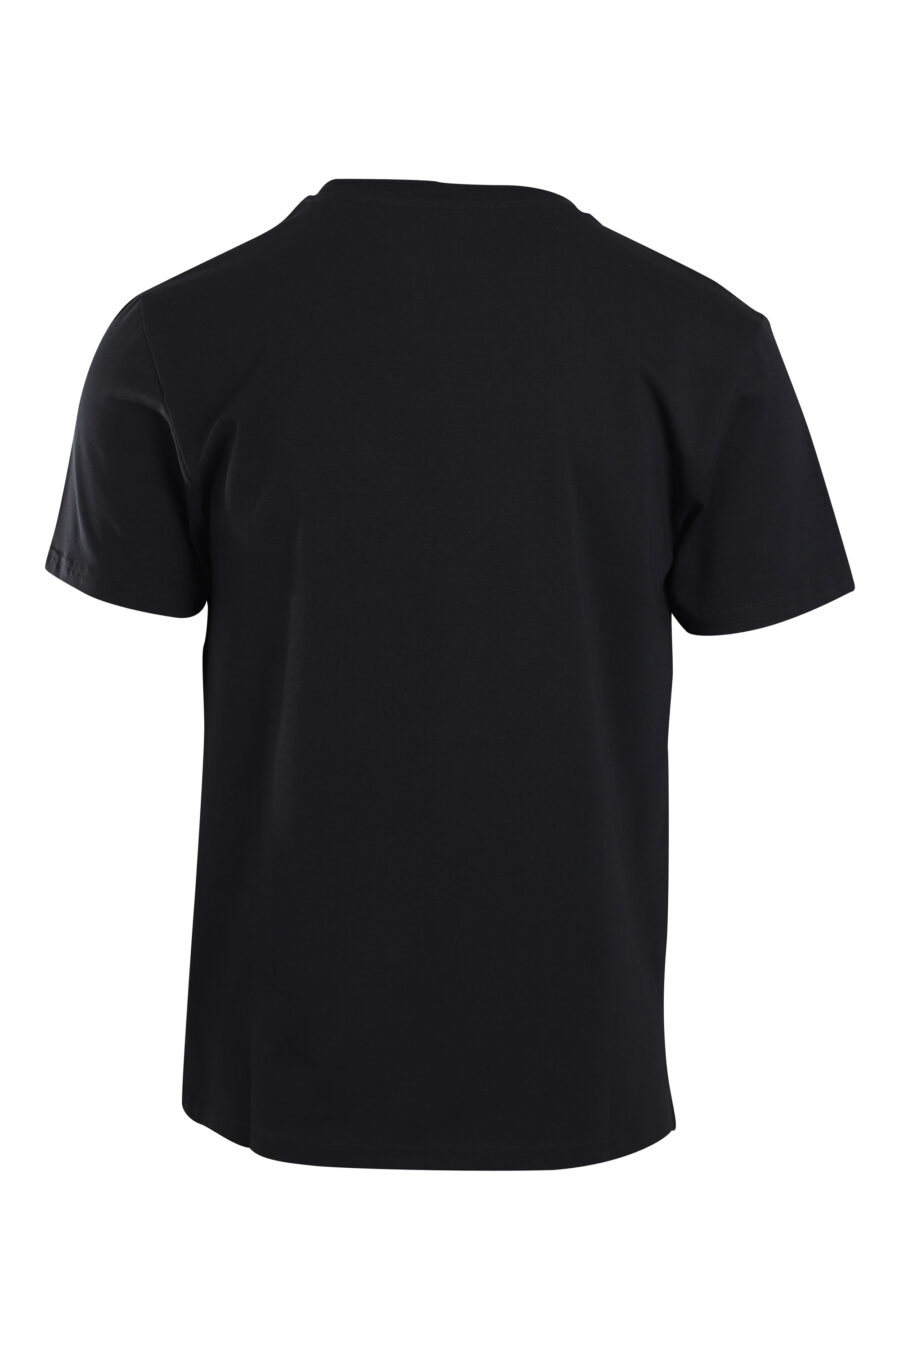 Camiseta negra con mini logo "swim" - IMG 2184